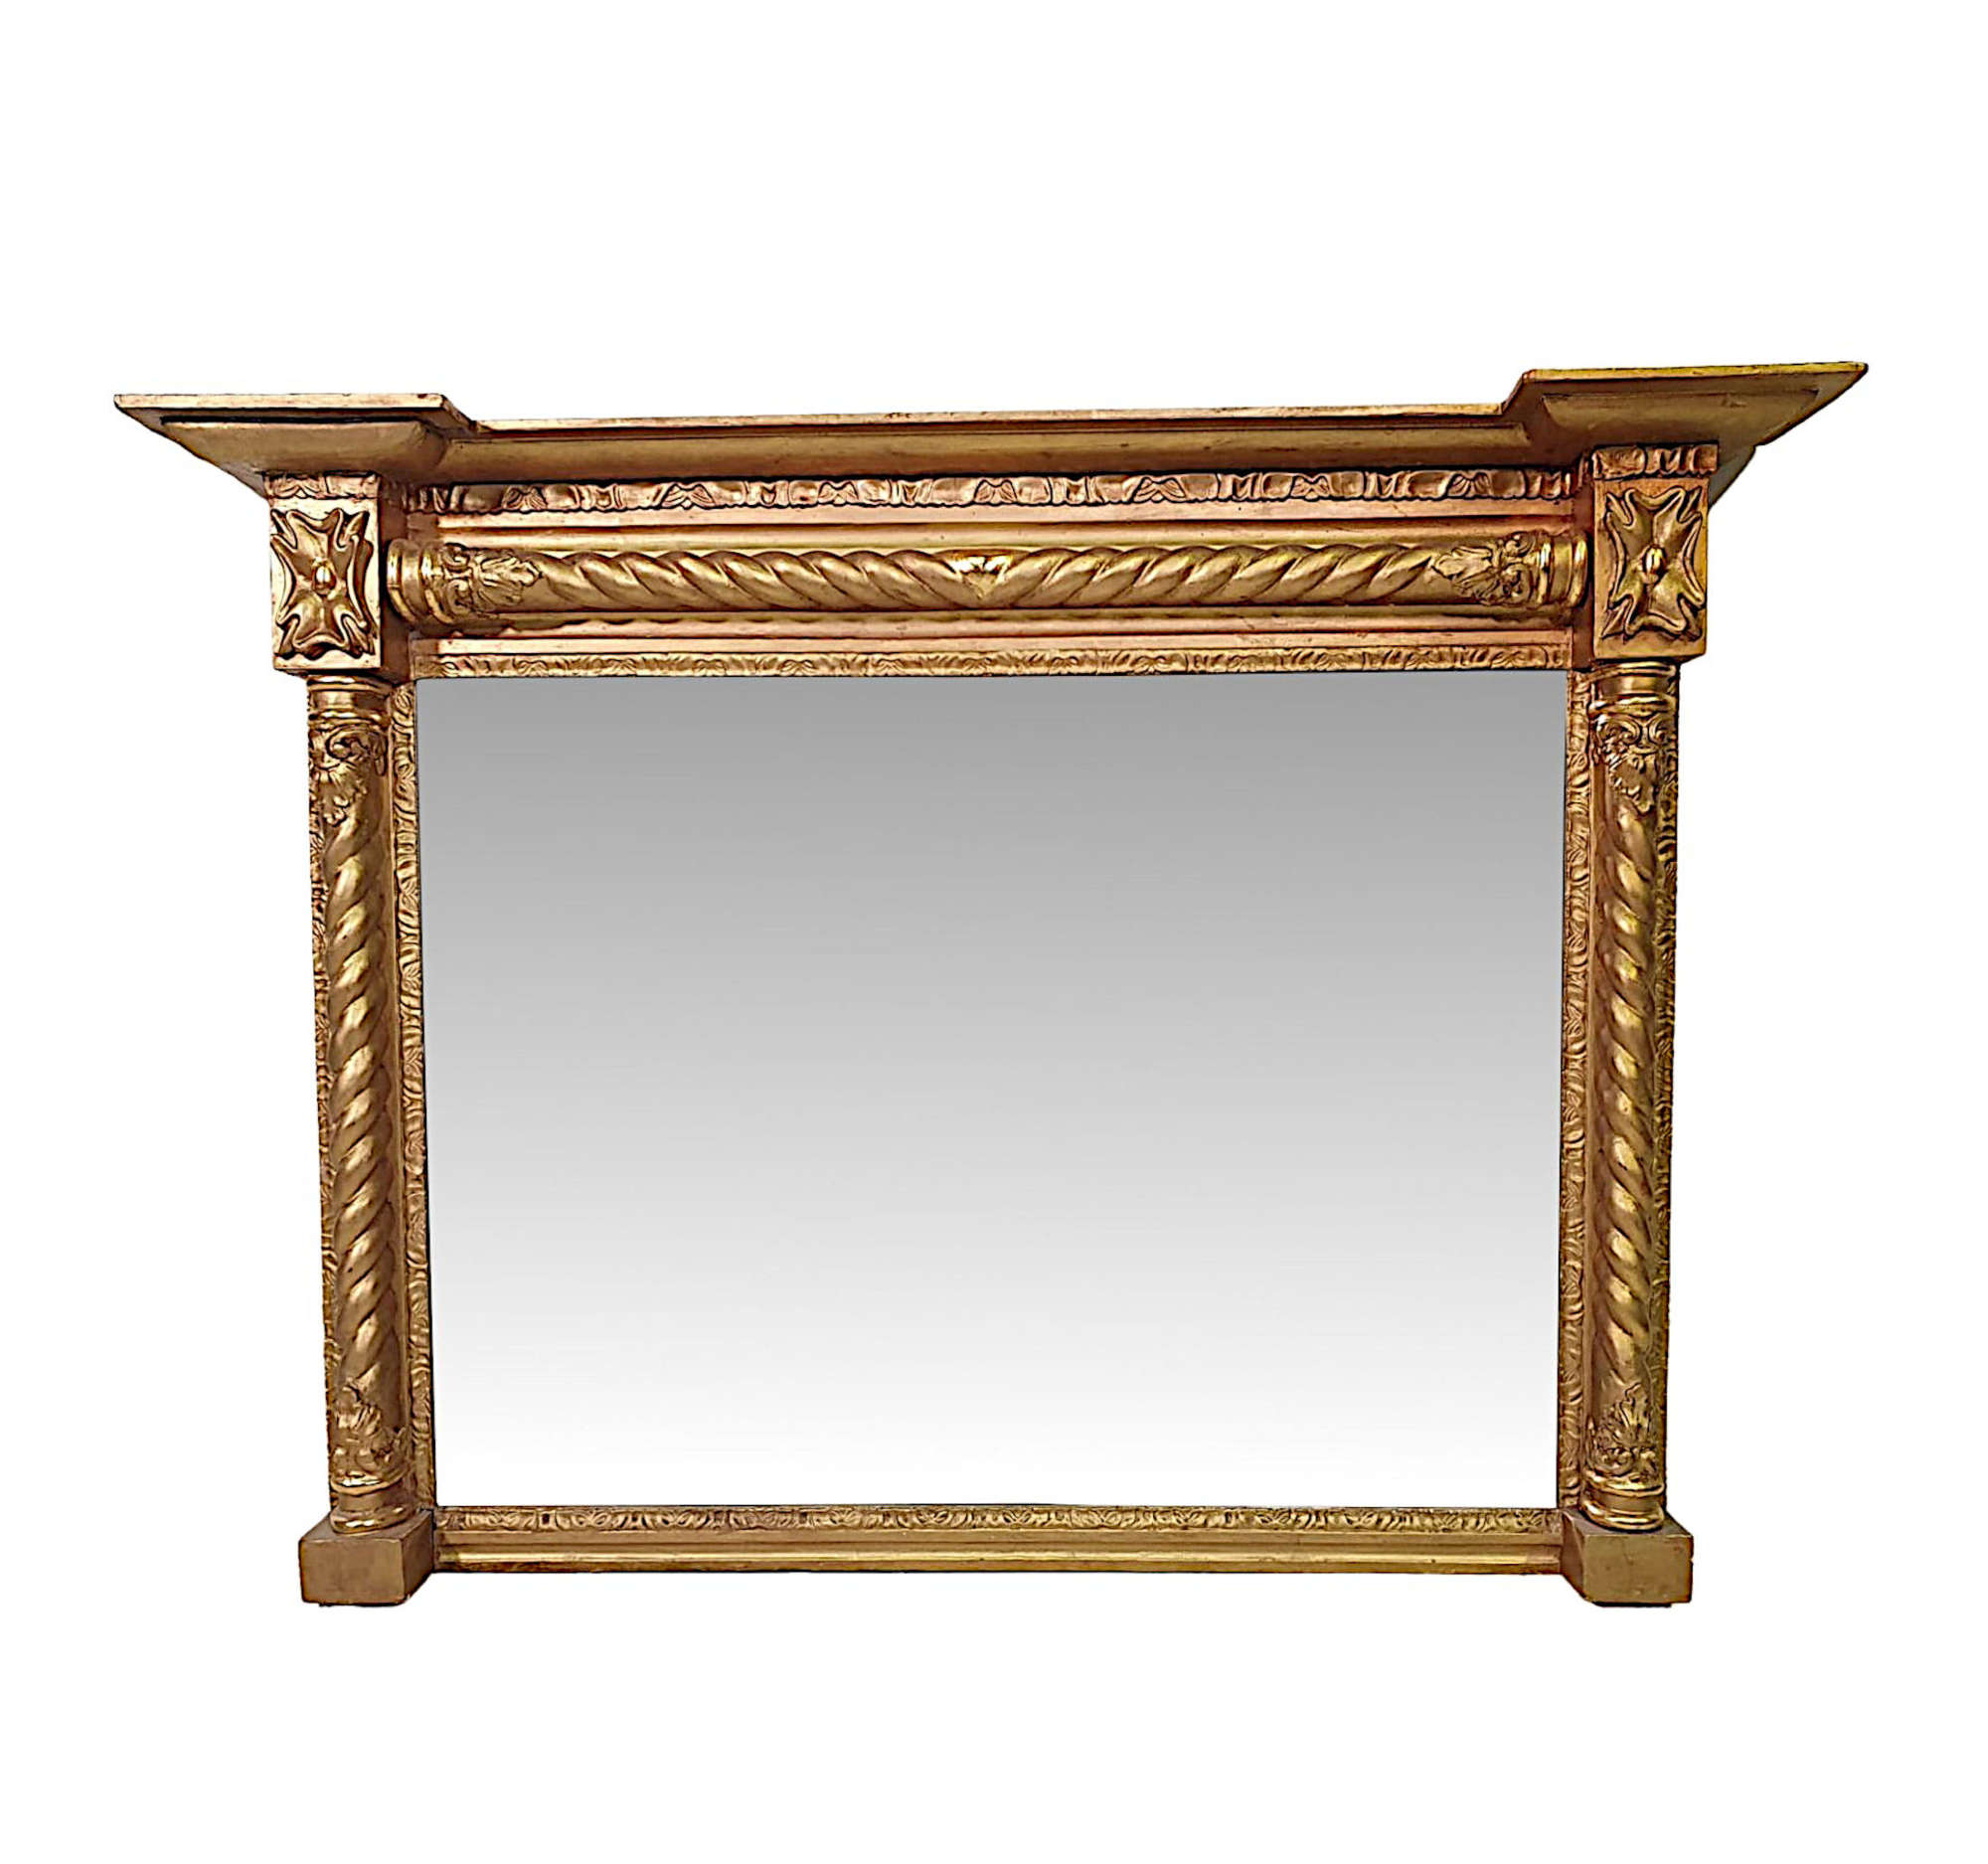 A Fine 19th Century Regency Rectangular Giltwood Antique Overmantle Mirror